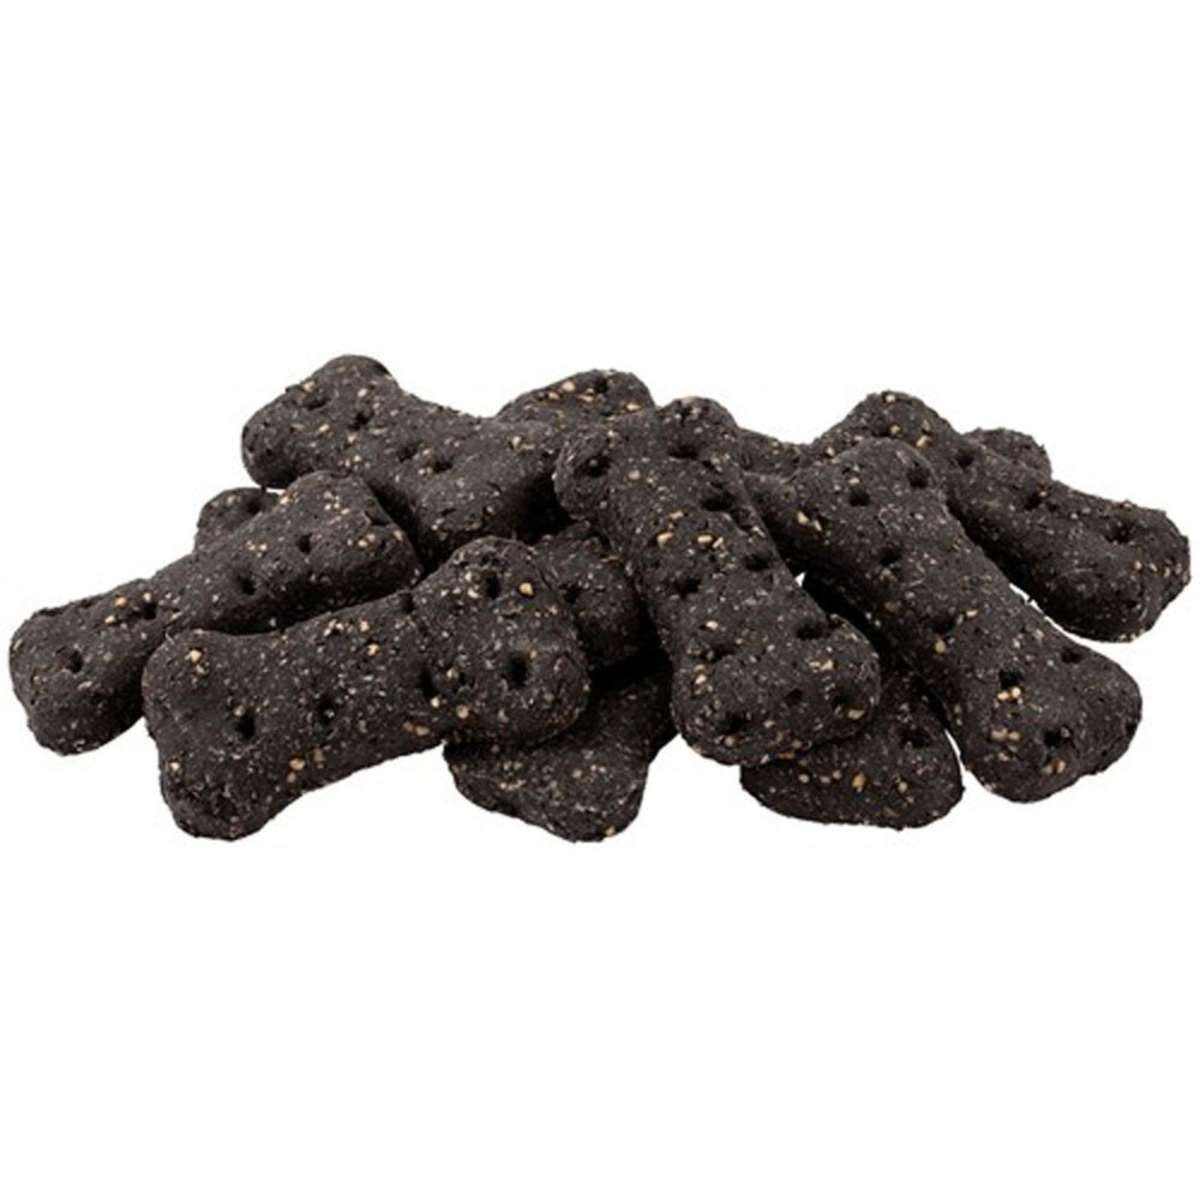 Blackdog Mini Charcoal Biscuits. Australian Made Healthy Dog Treats